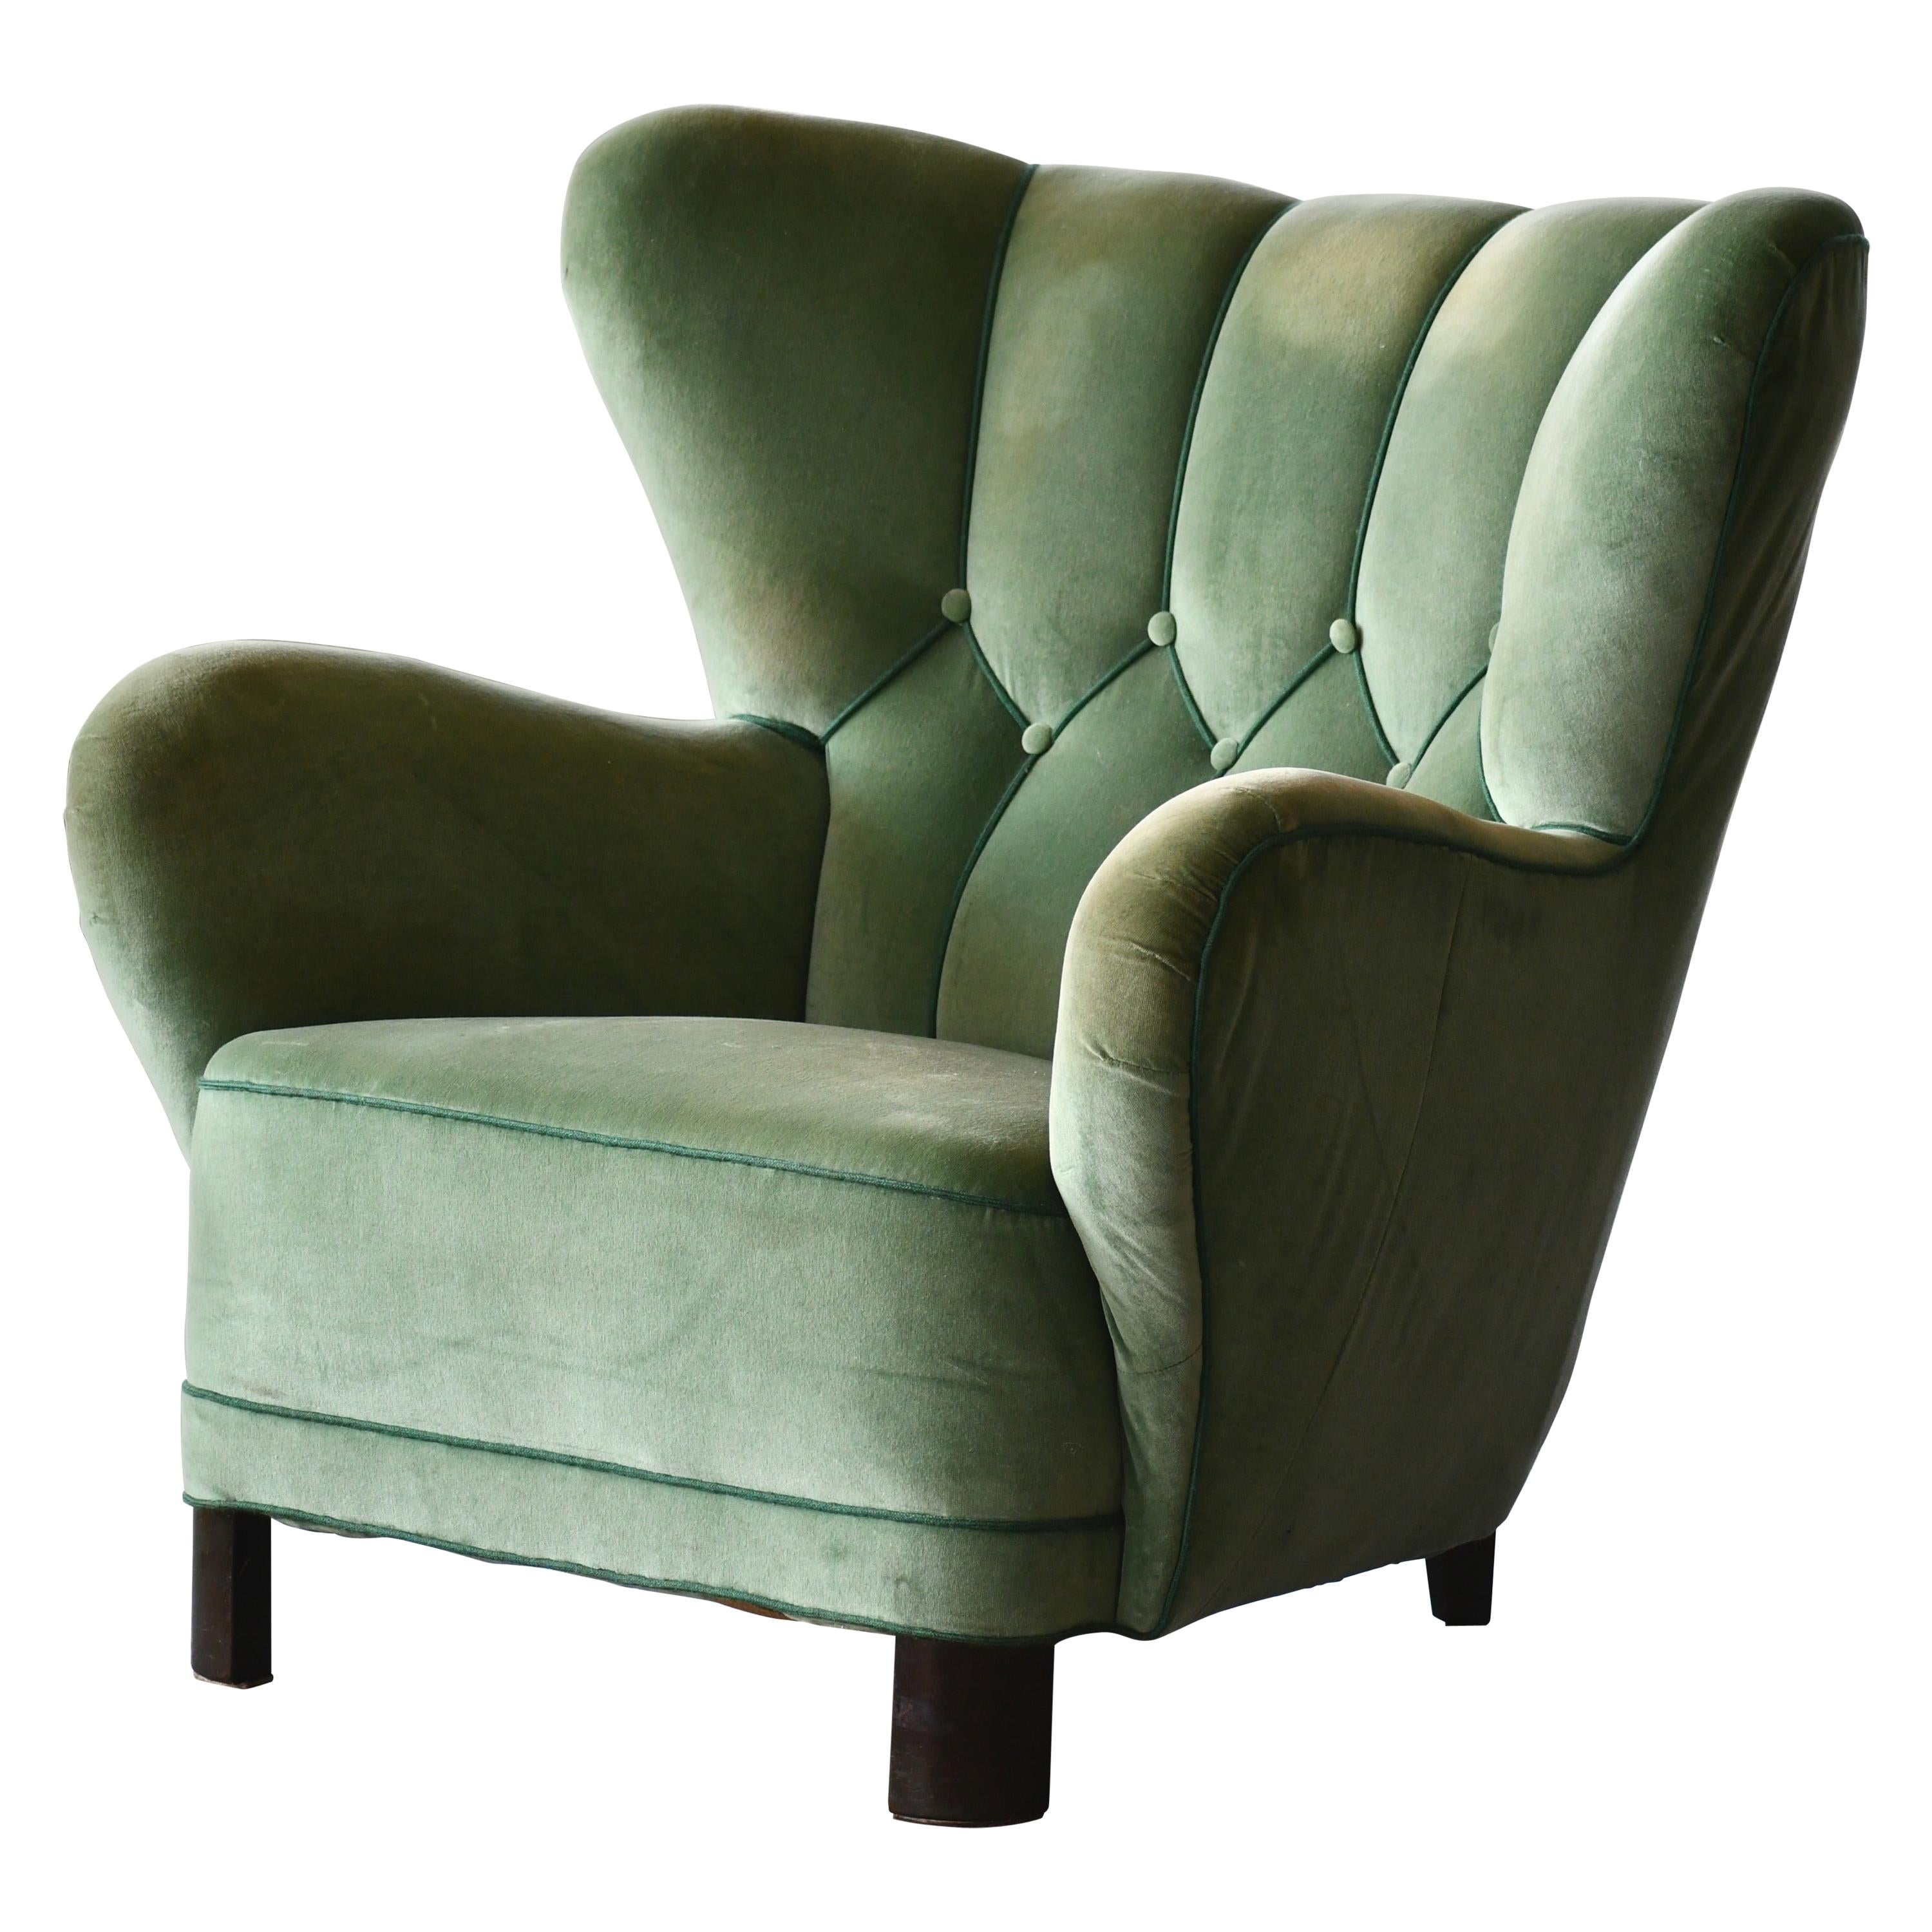 Danish 1940s Lassen Style Easy Chair in Green Mohair Fabric